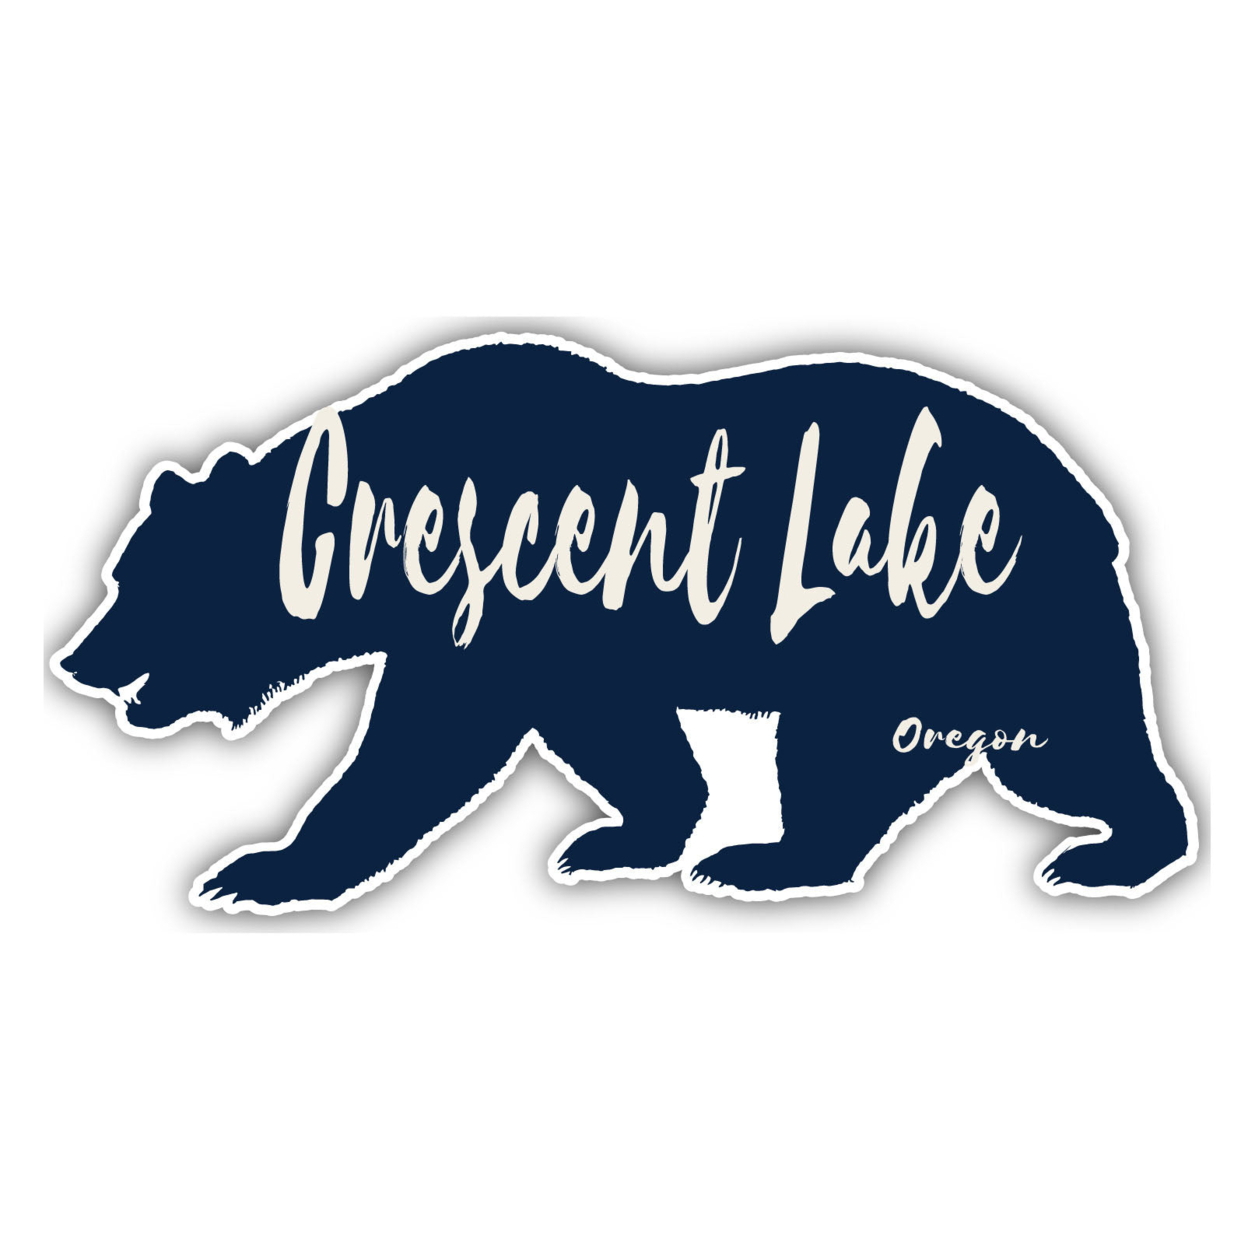 Crescent Lake Oregon Souvenir Decorative Stickers (Choose Theme And Size) - Single Unit, 8-Inch, Camp Life